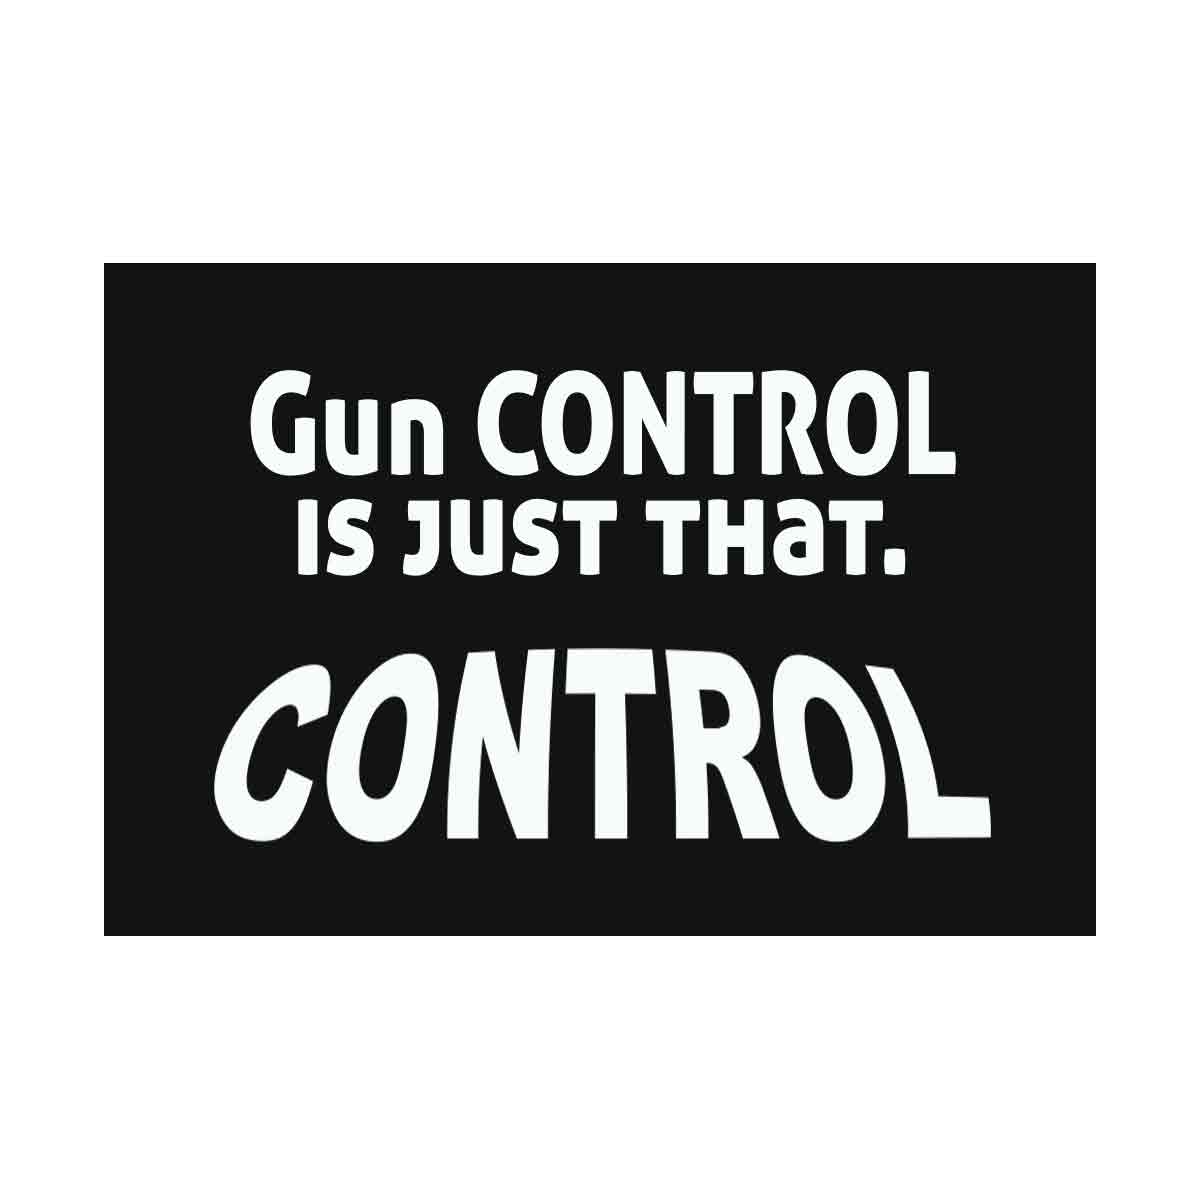 Gun CONTROL